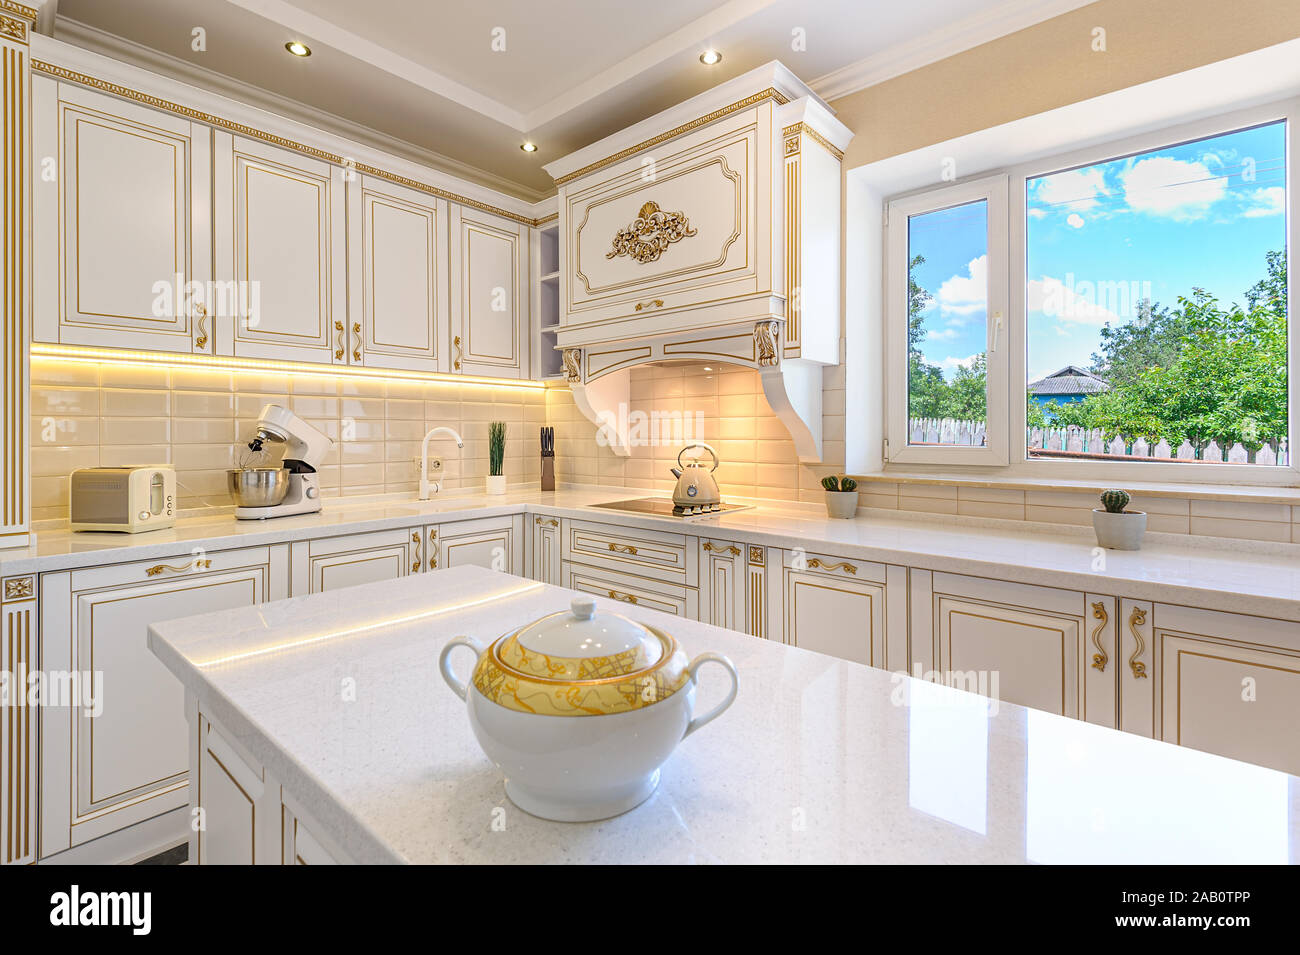 https://c8.alamy.com/comp/2AB0TPP/neoclassic-style-luxury-kitchen-interior-with-island-2AB0TPP.jpg